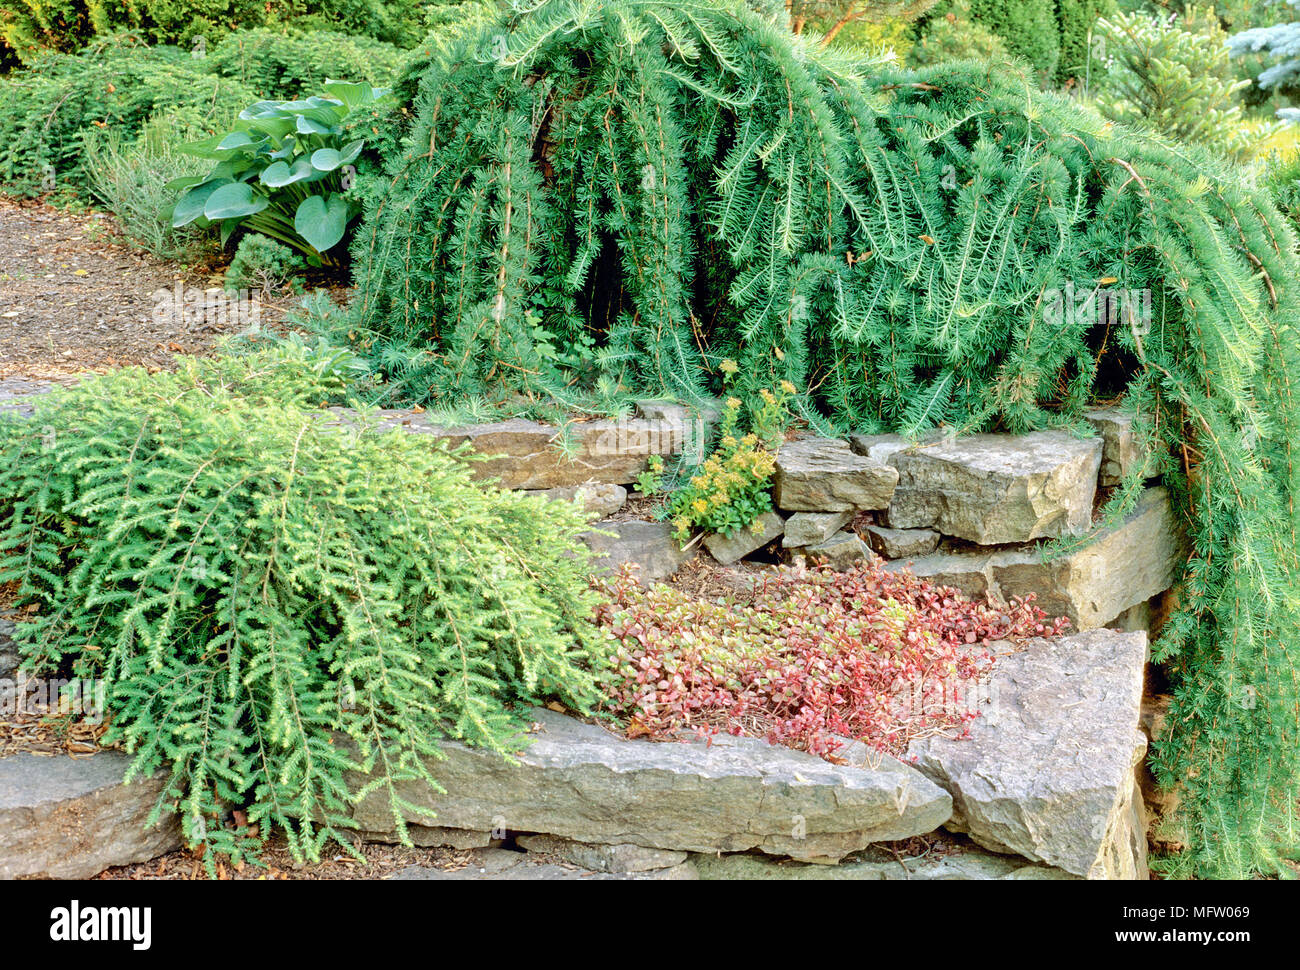 Jardin de rocaille planté de Tsuga canadensis 'Pendula', Larix deciduas 'Pendula', Sedum spurium 'Red Carpet' et Sedum kamtschaticum Banque D'Images